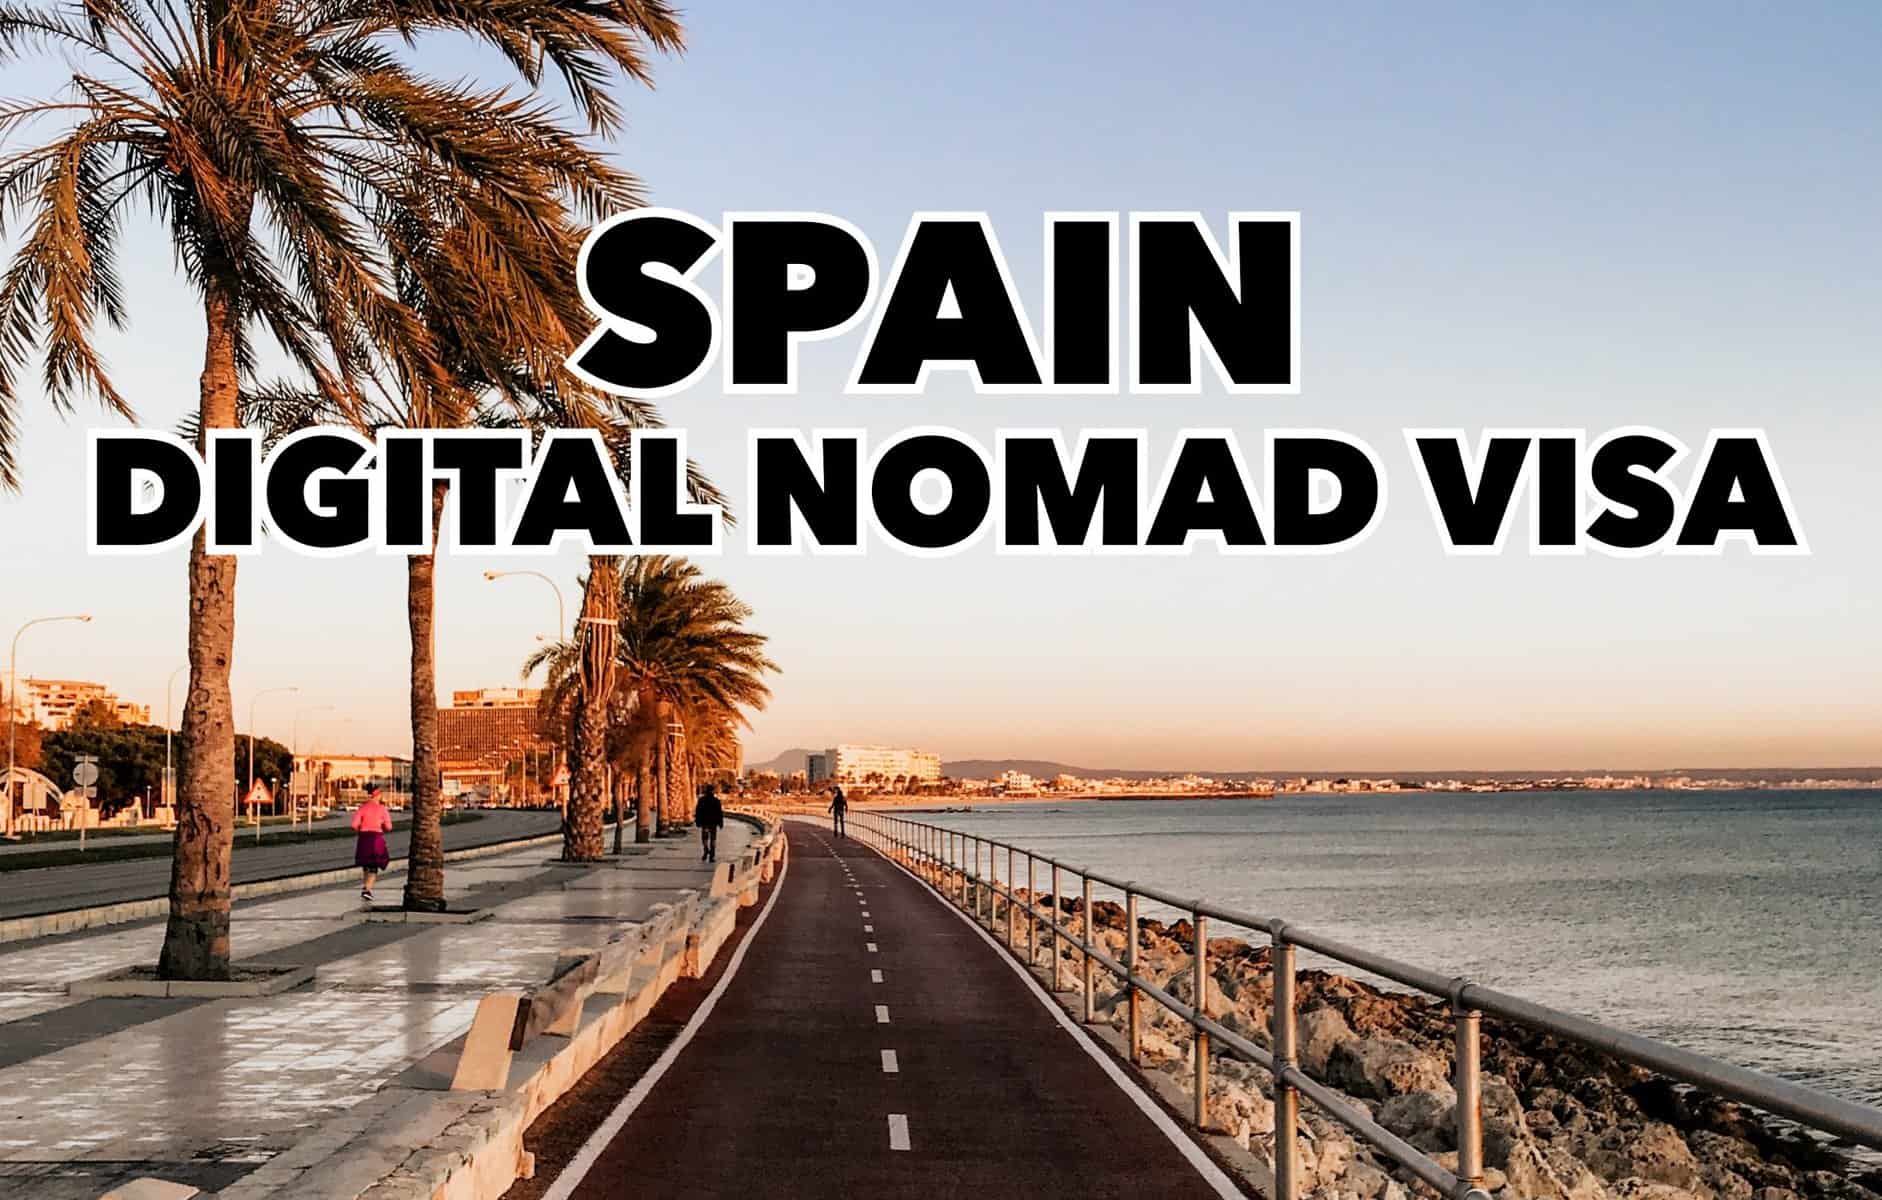 Spain Digital Nomad Visa: Live Your Dreams